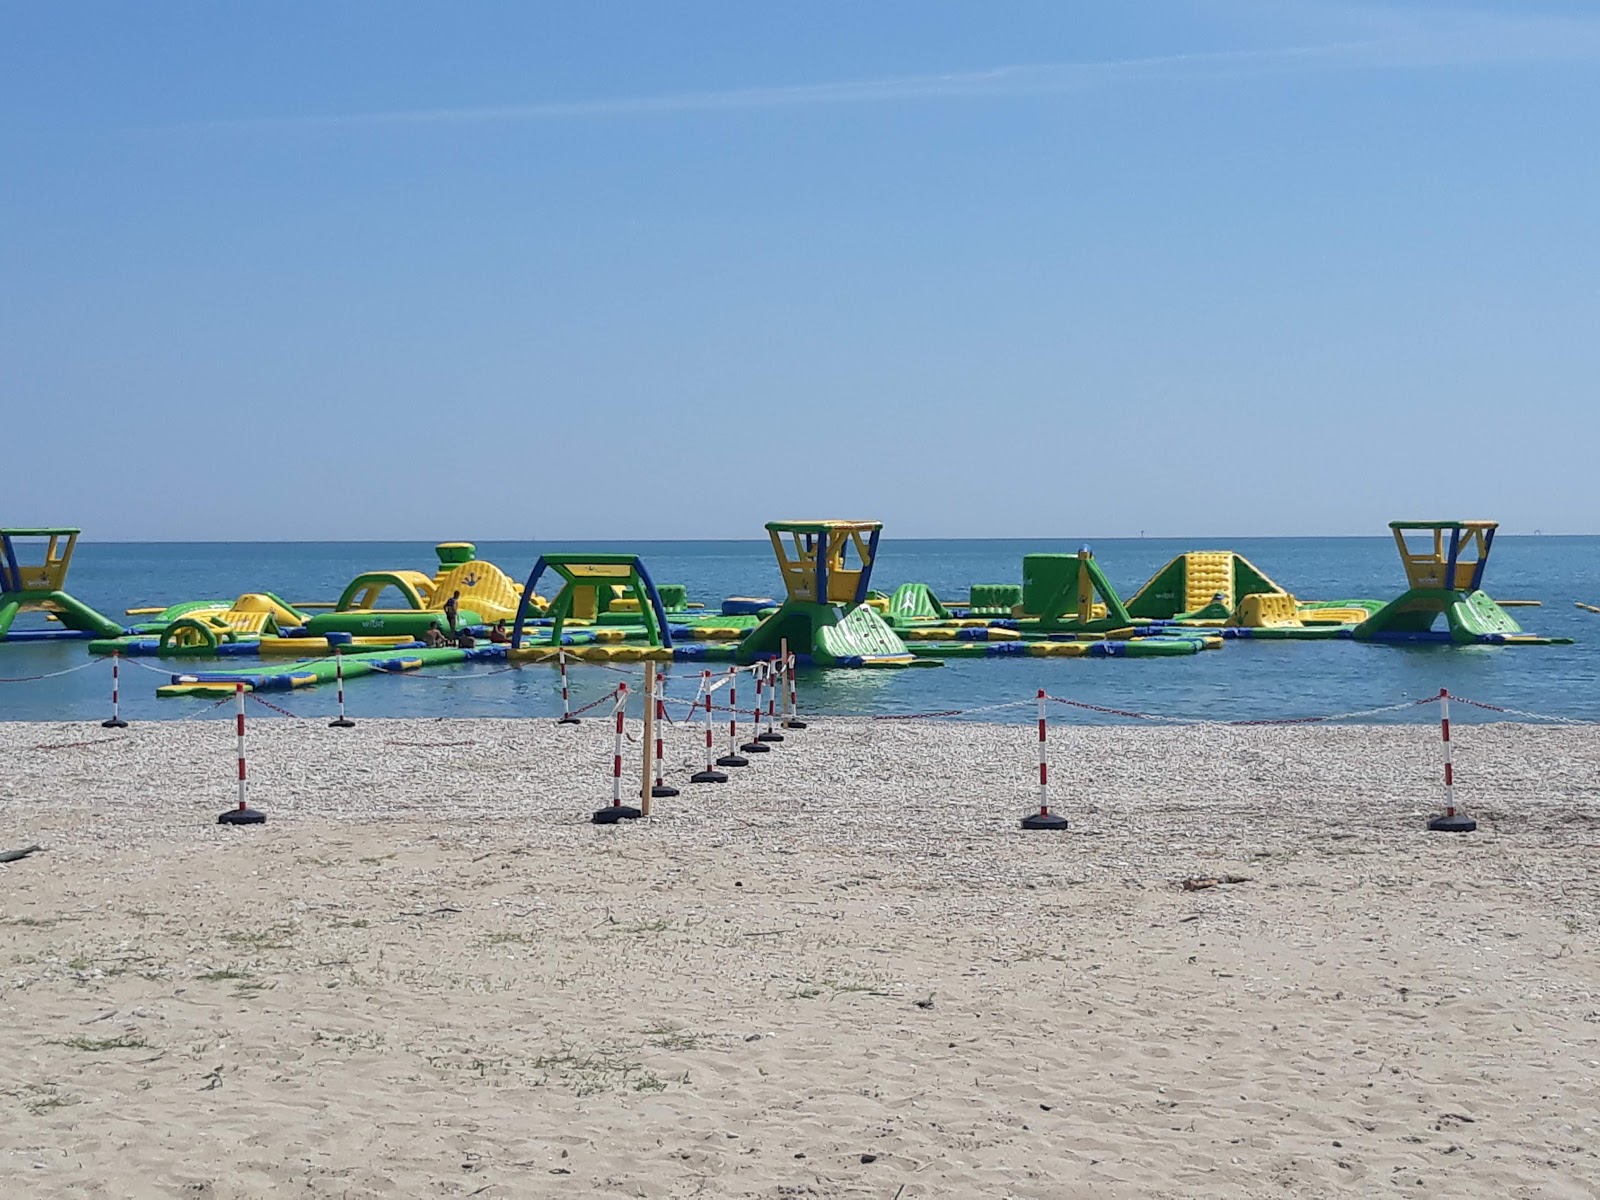 Foto de Spiaggia Pineto - lugar popular entre os apreciadores de relaxamento